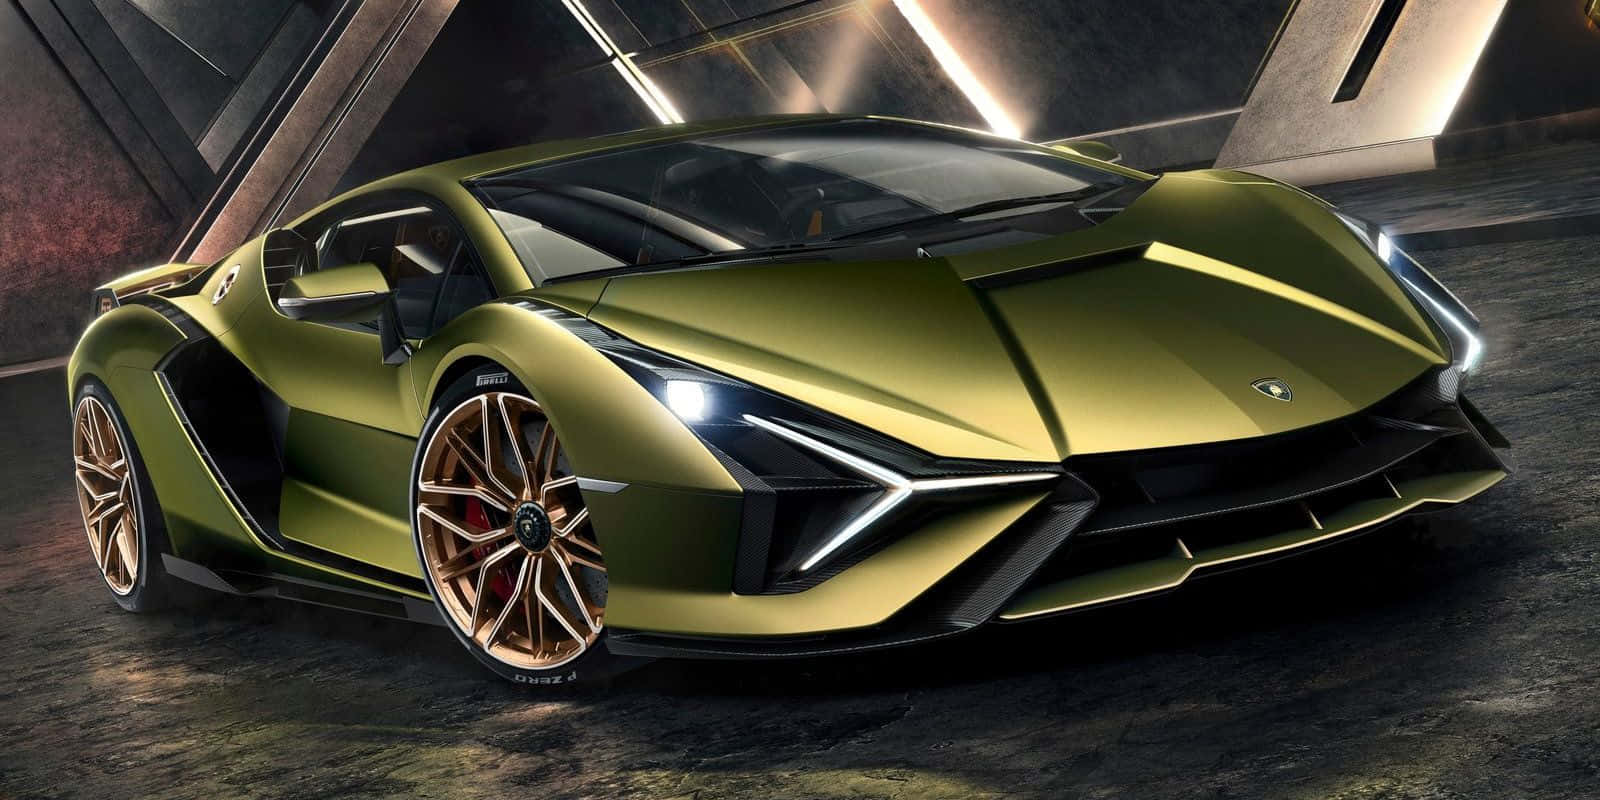 Lamborghinihuracan Är En Grön Sportbil.